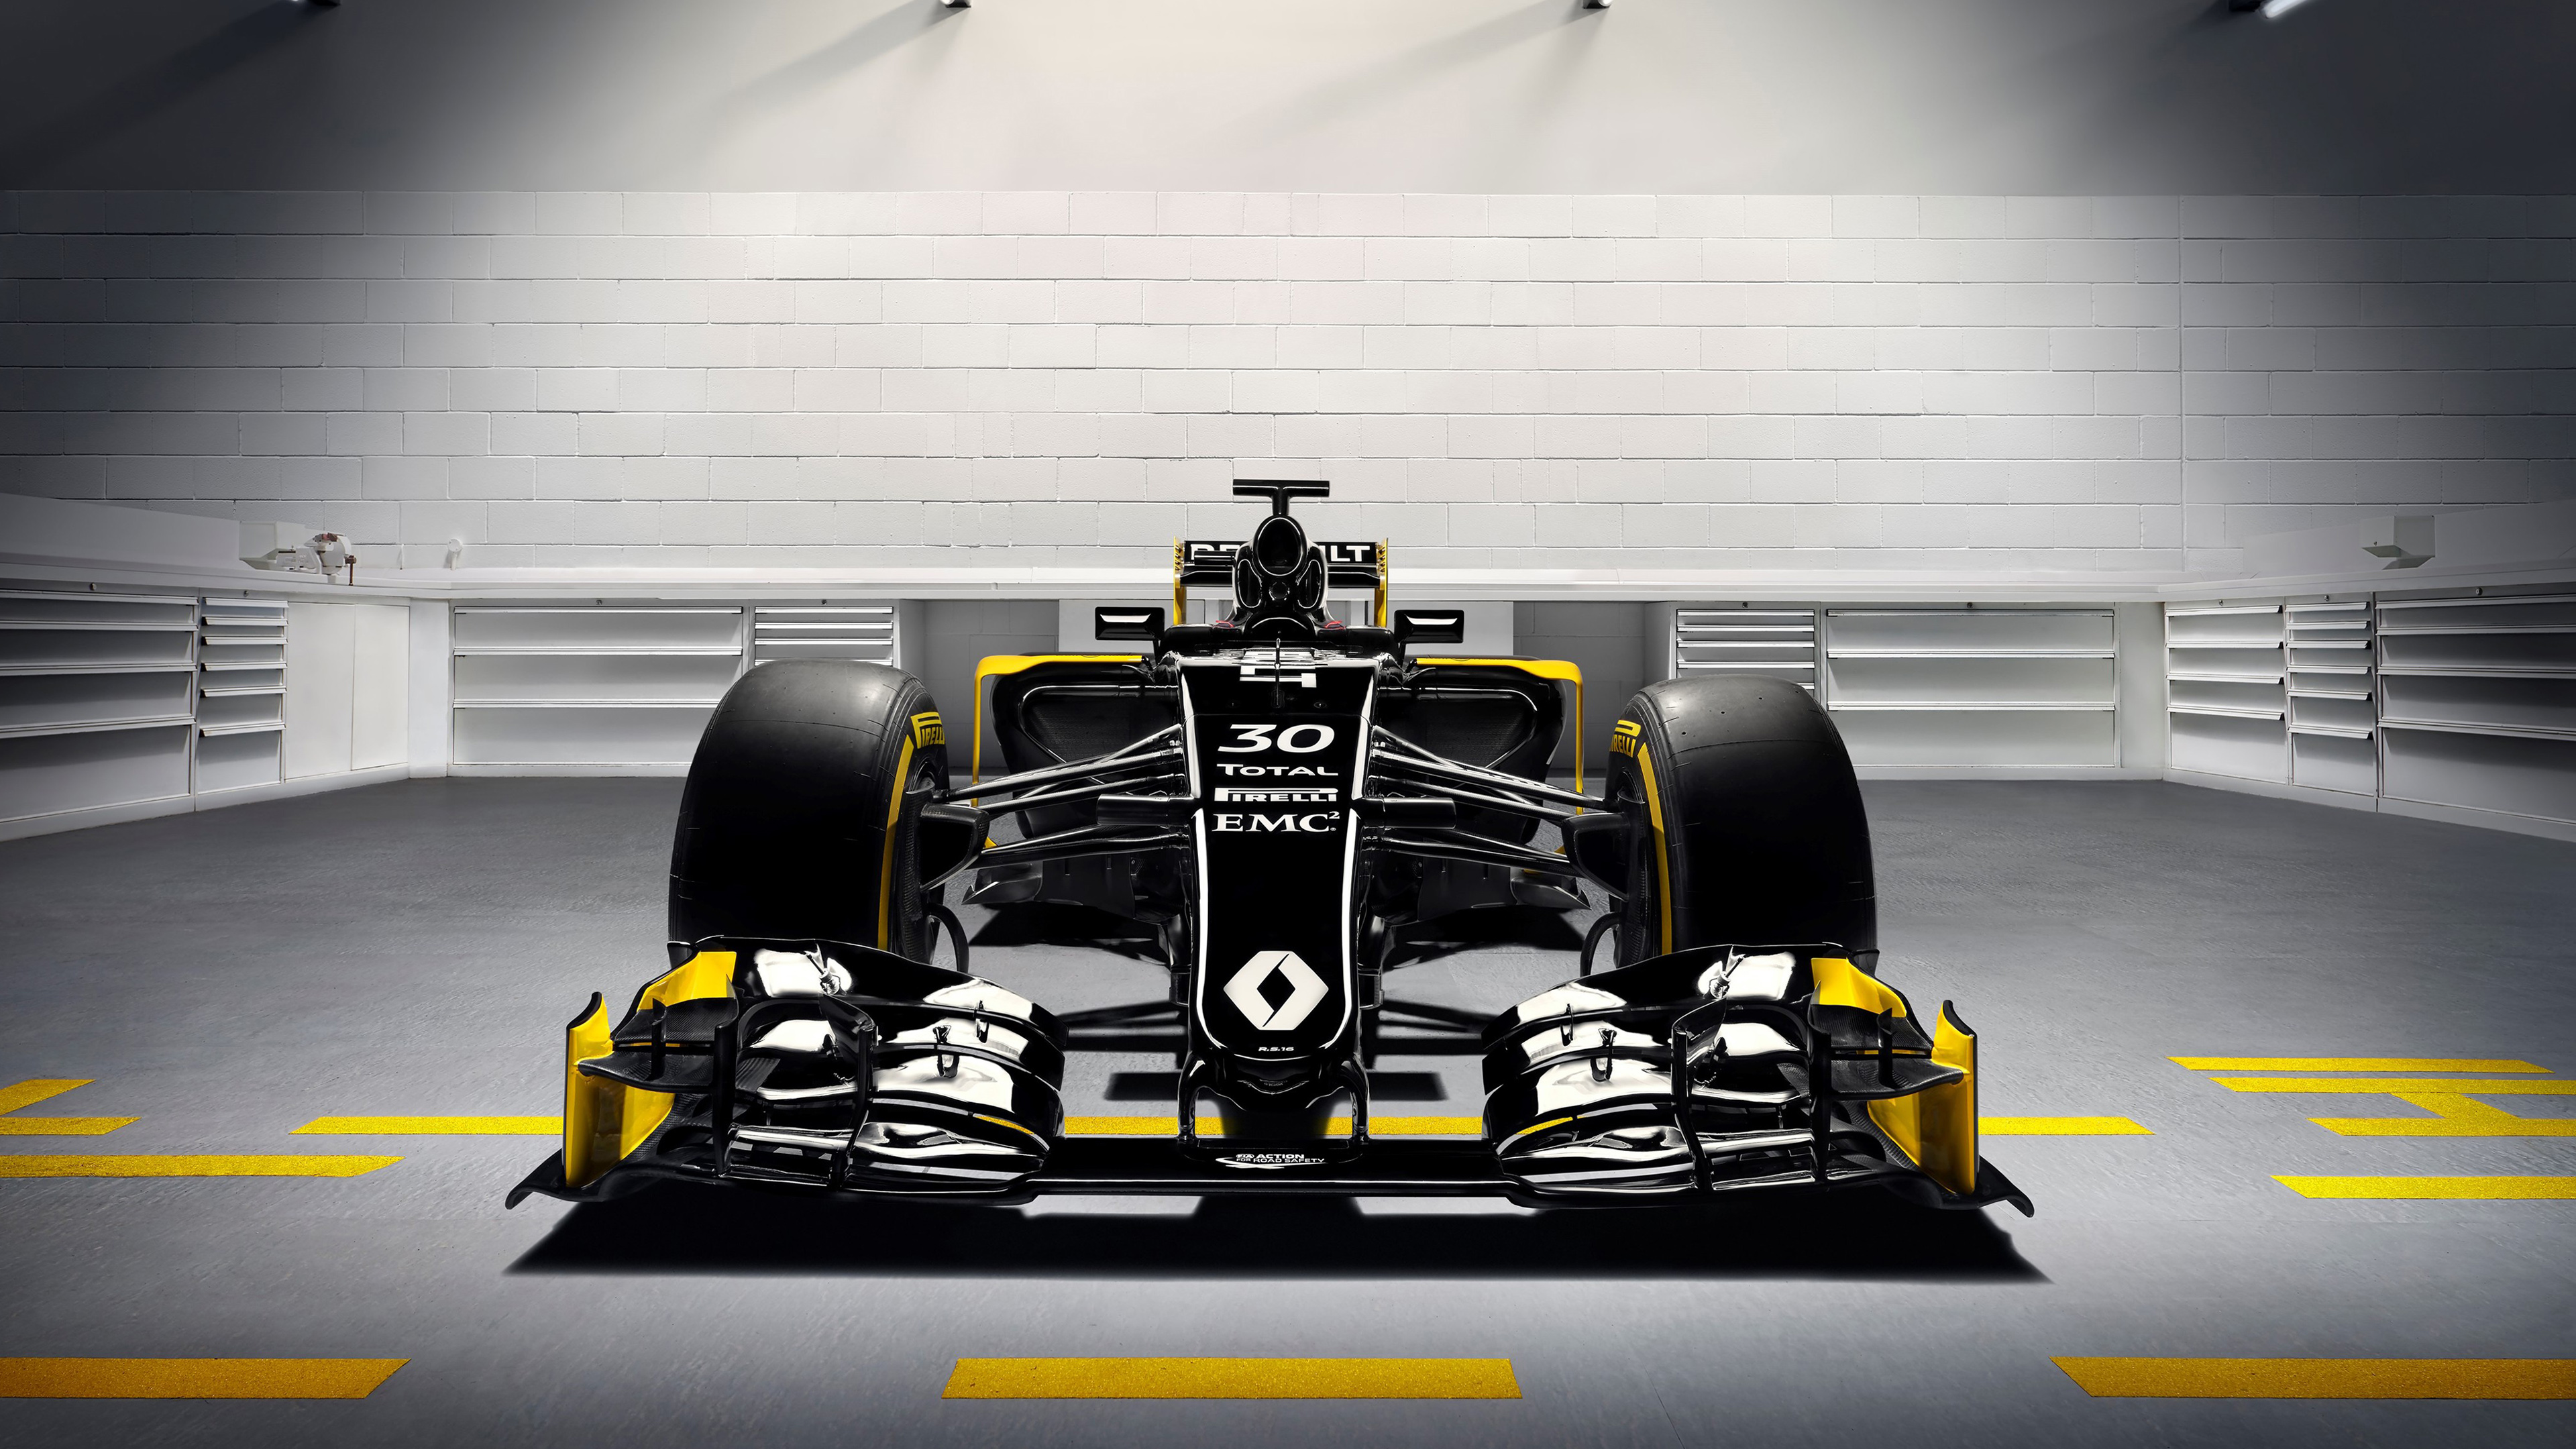 Renault RS16 2016 Formula 1 Car Wallpaper | HD Car ...